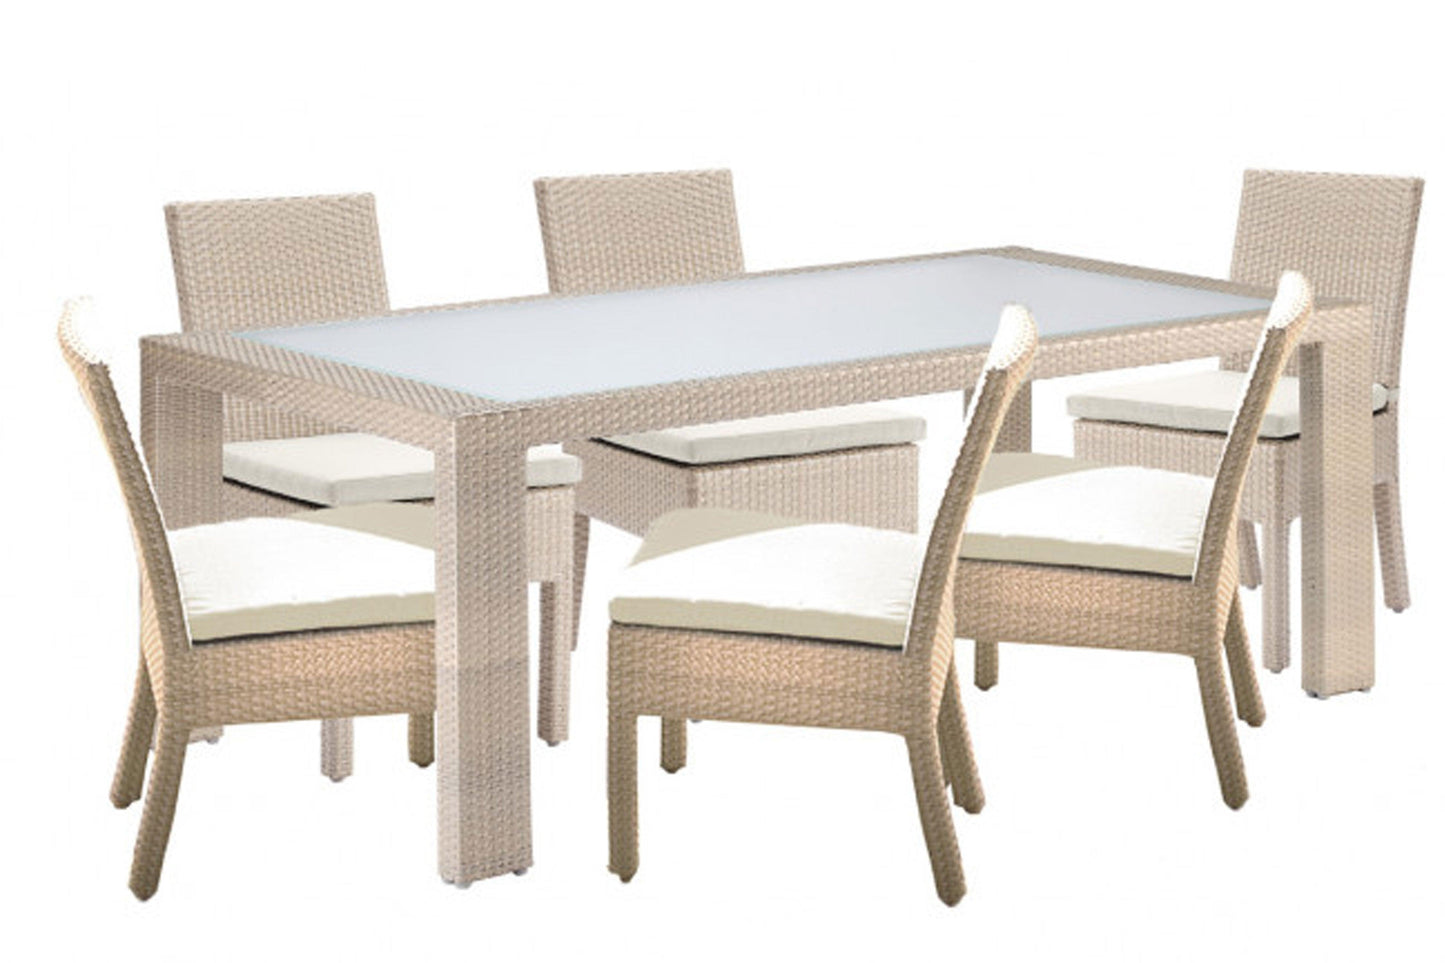 Cubix Rectangular Woven Dining Table w/glass SKU: 902-1349-KBU-RT - Venini Furniture 